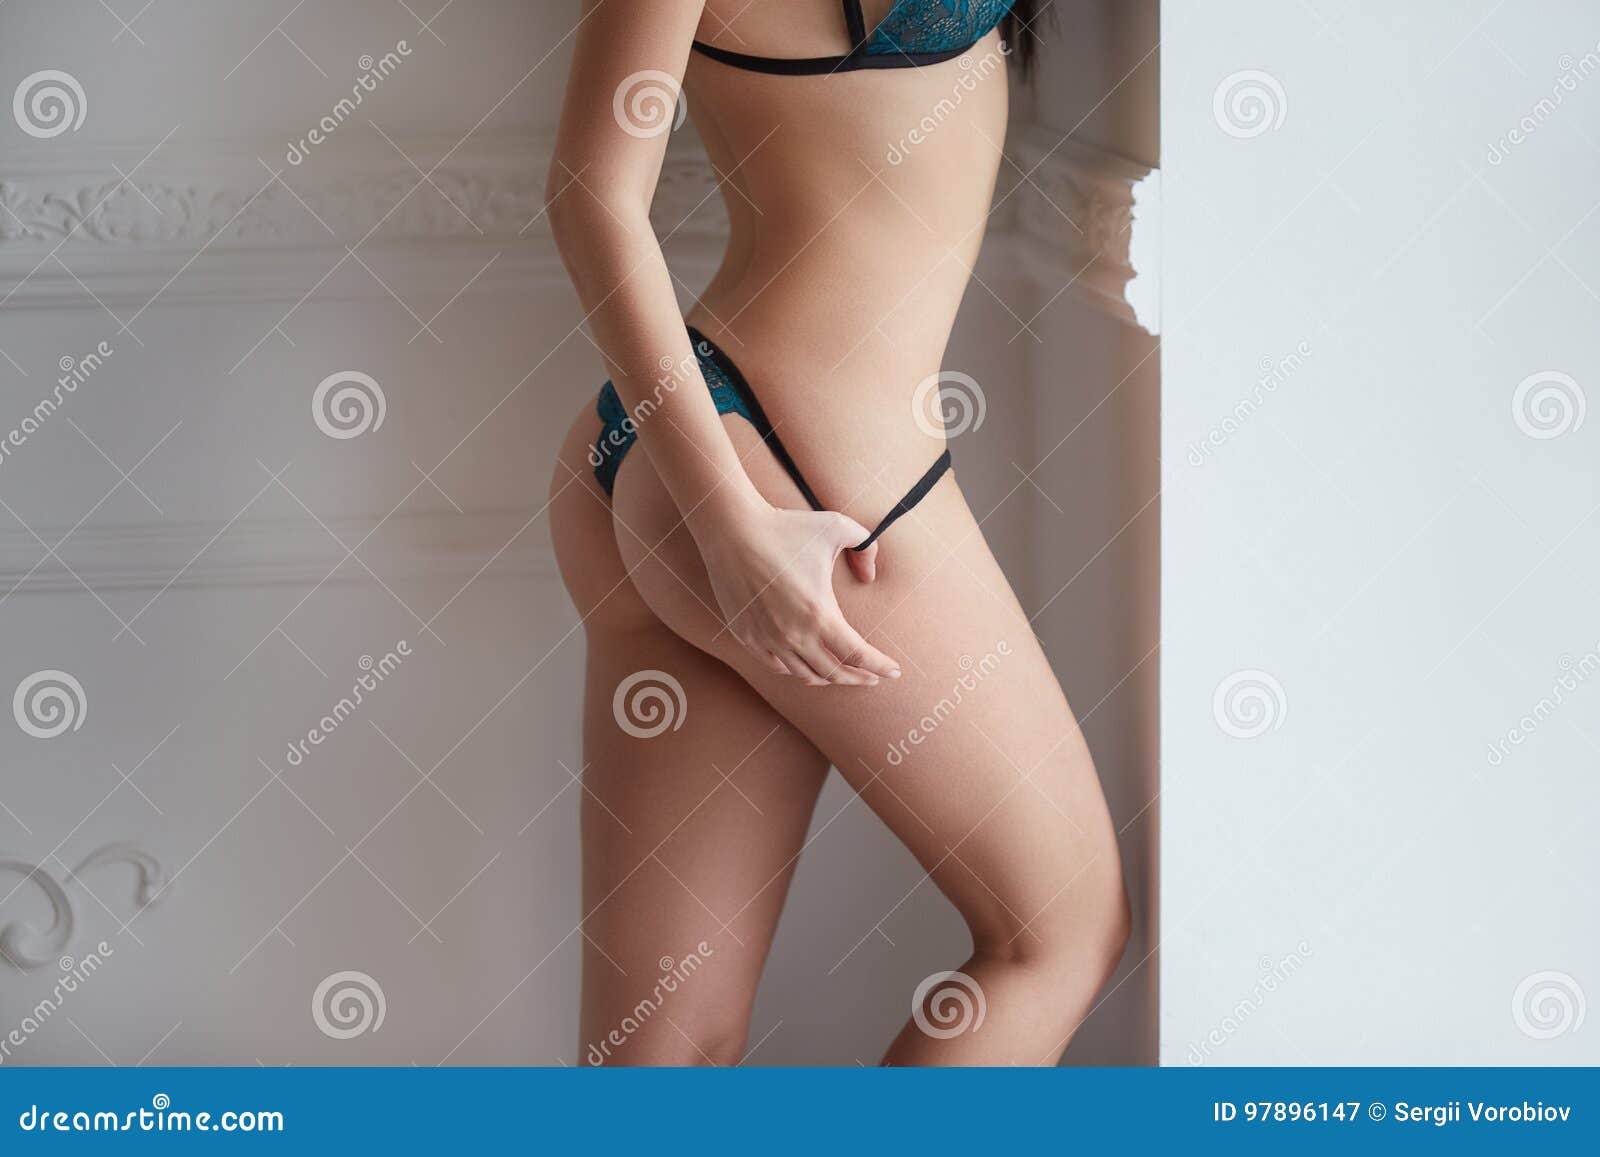 showing her panties